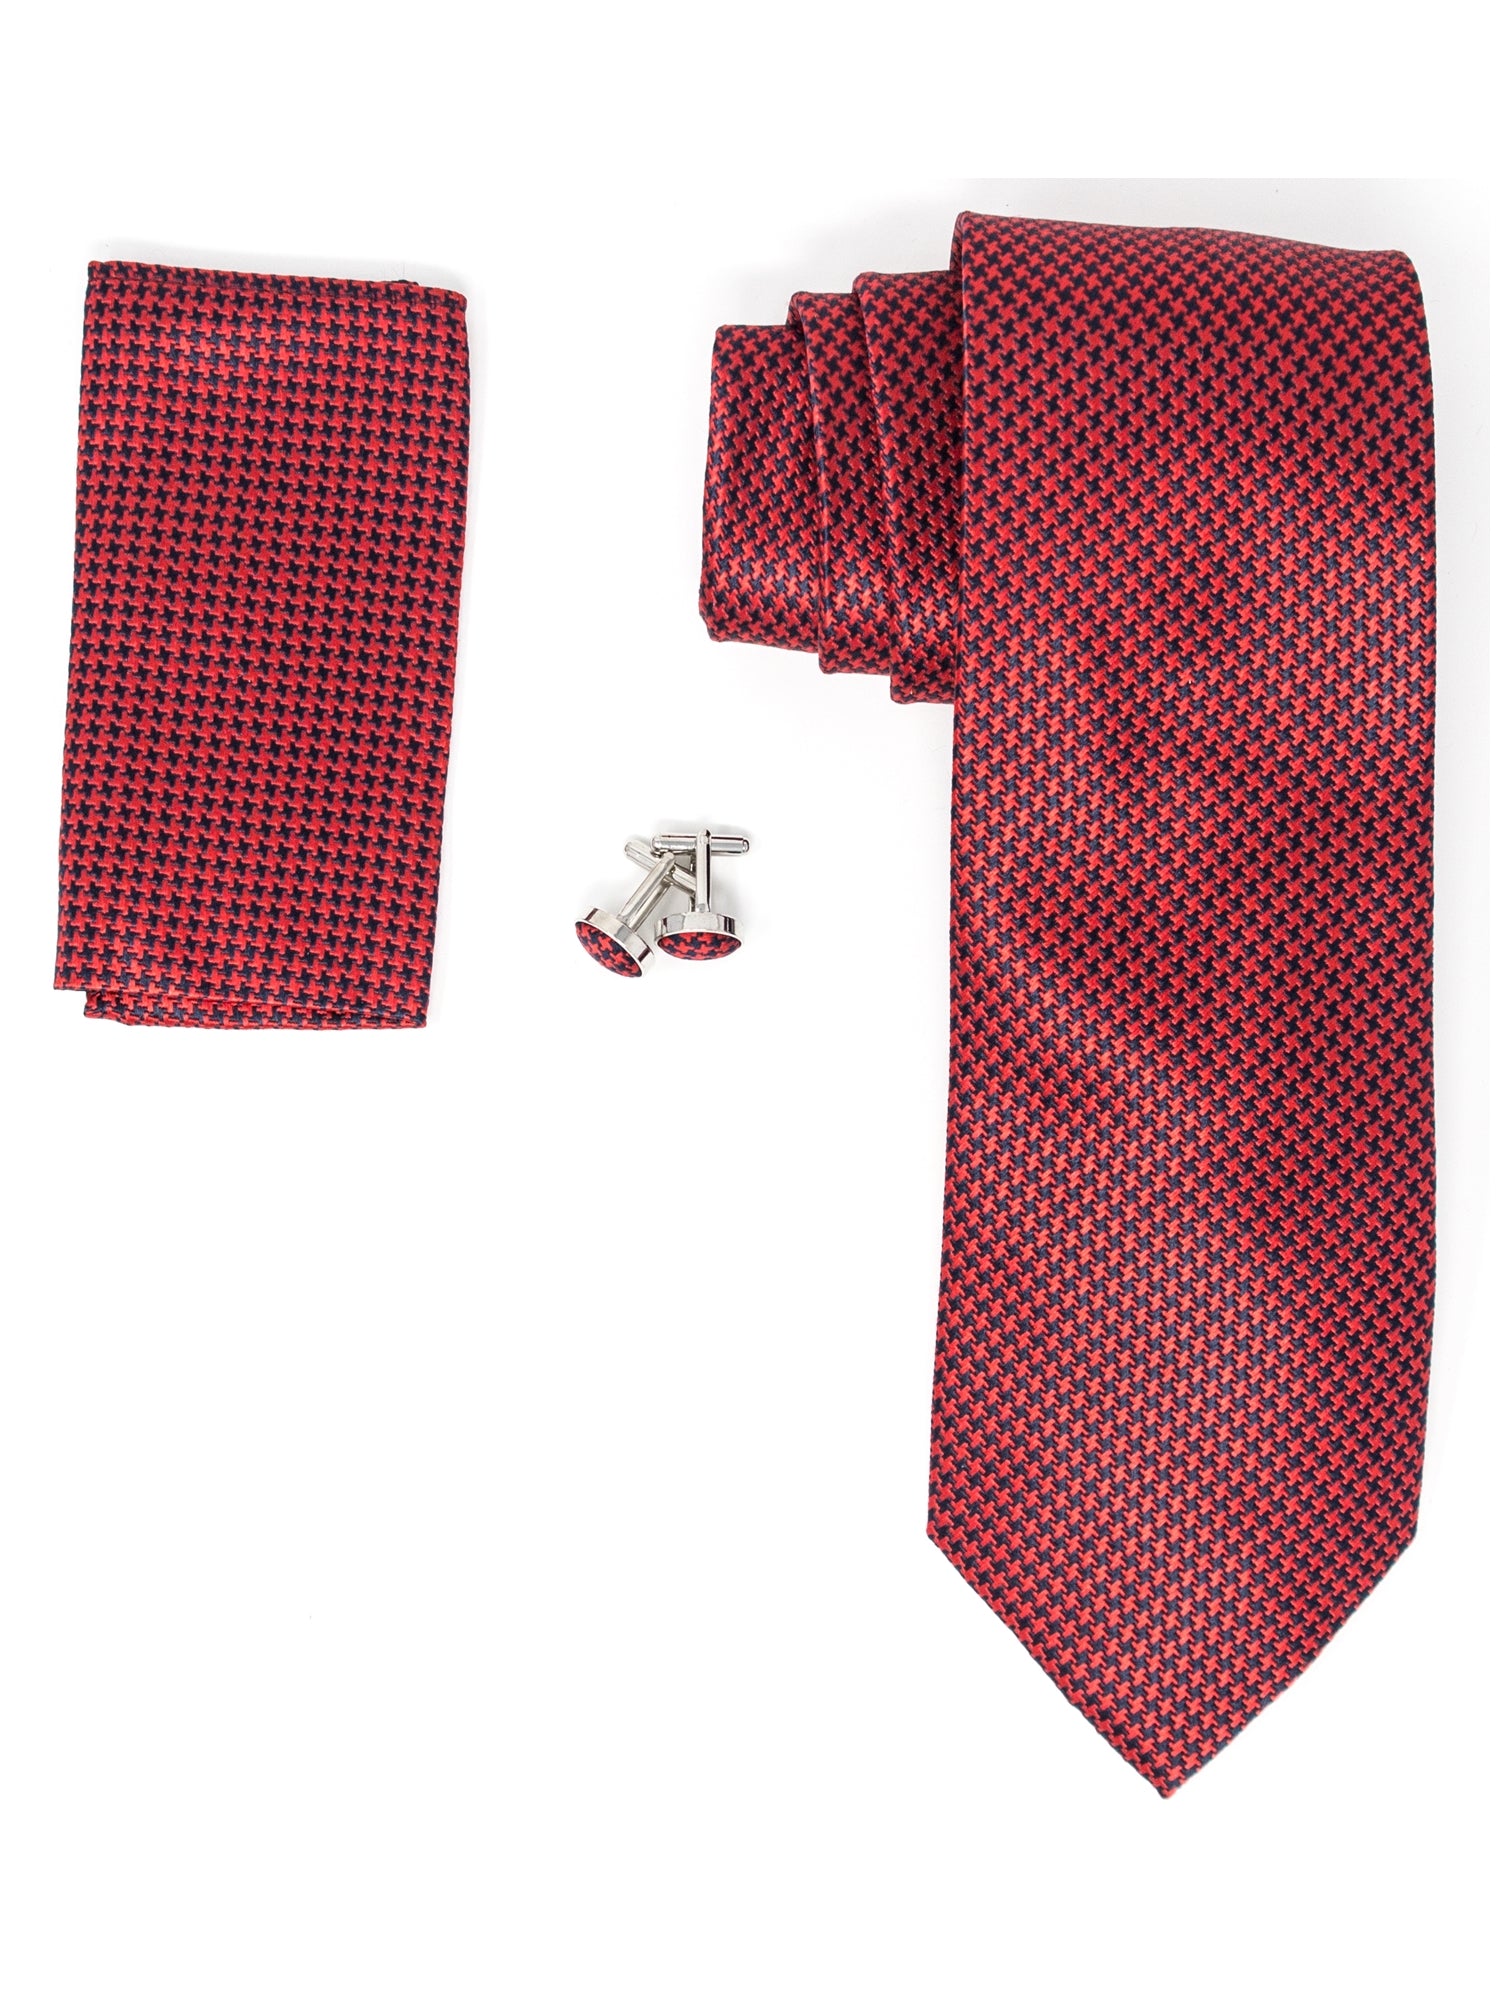 Men's Silk Neck Tie Set Cufflinks & Hanky Collection Neck Tie TheDapperTie Red And Black Geometric 1 Regular 